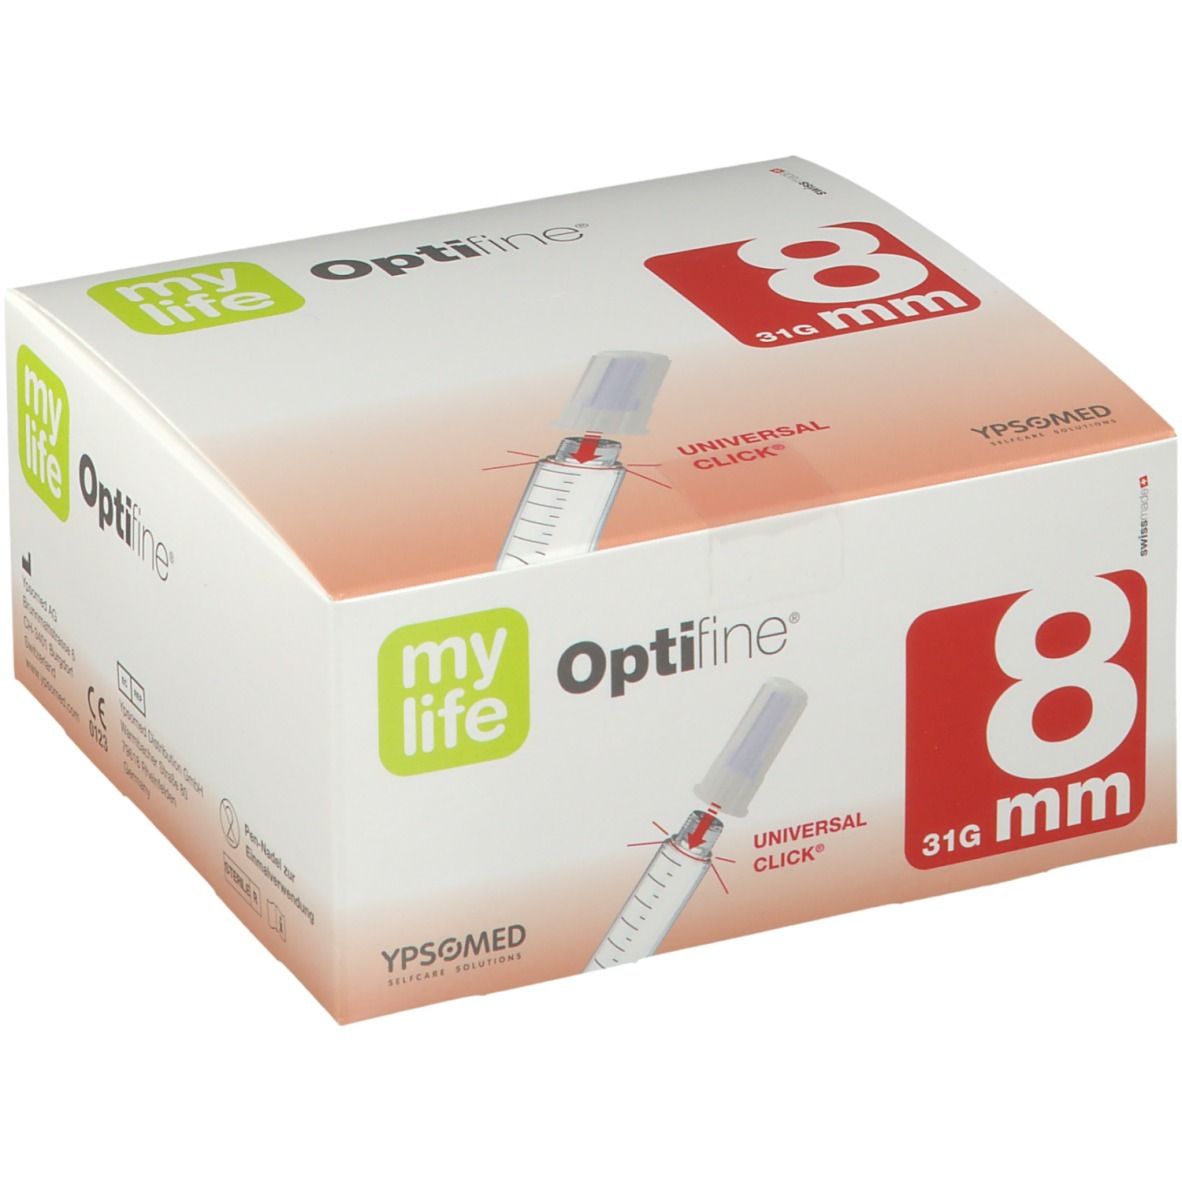 mylife Optifine® 8 mm Kanülen